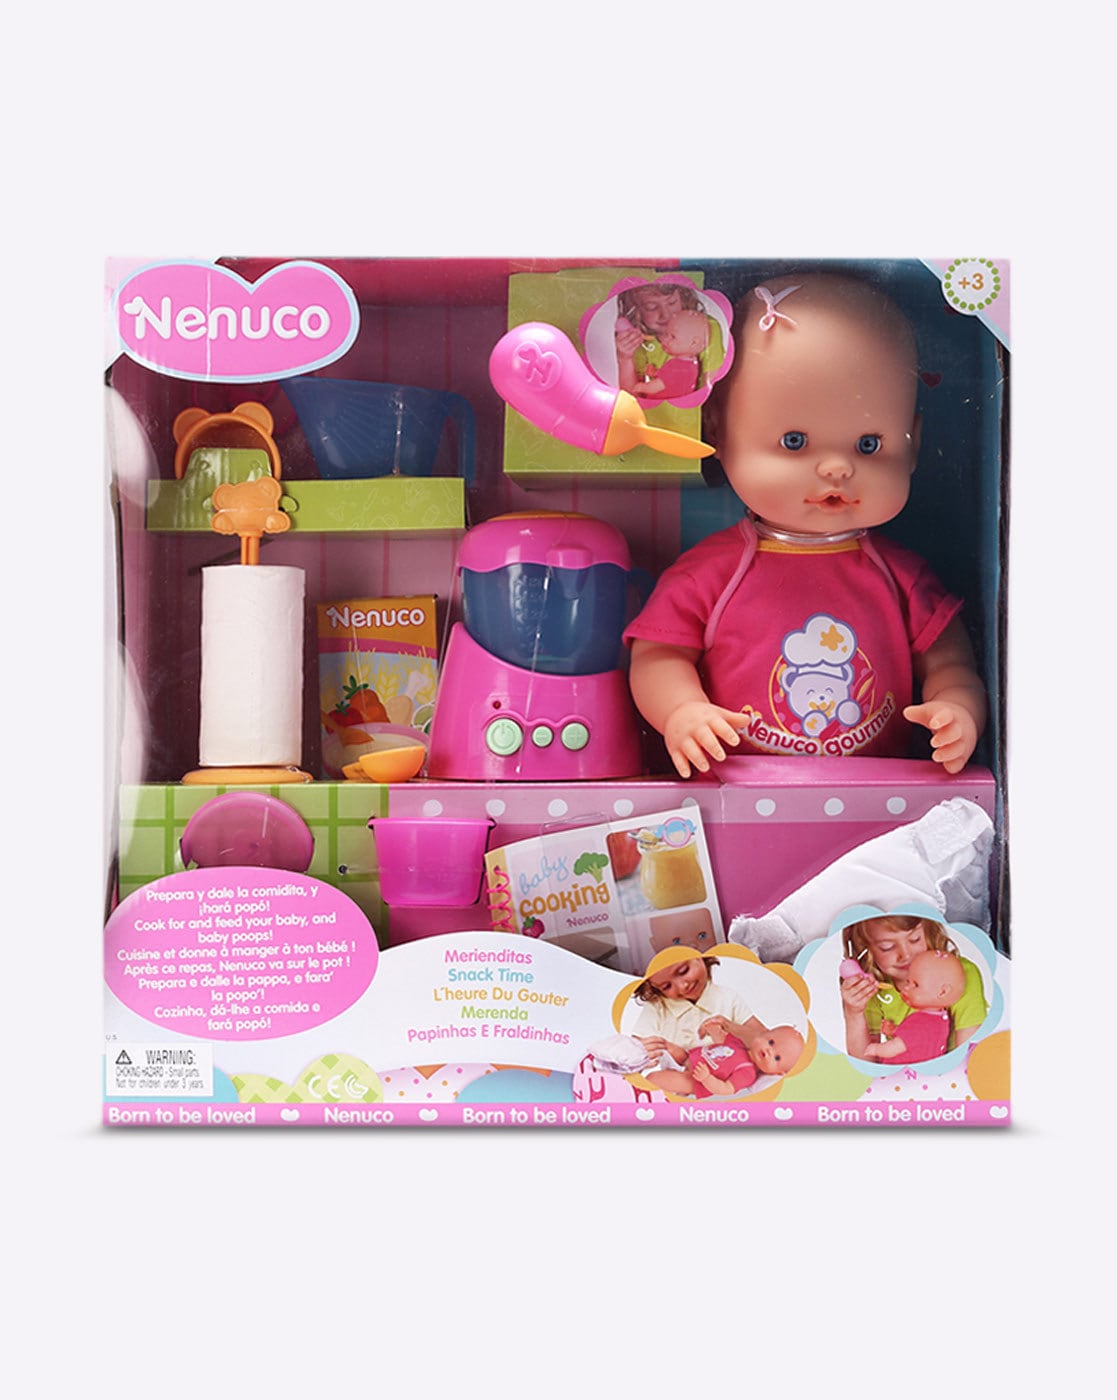 baby doll set toys